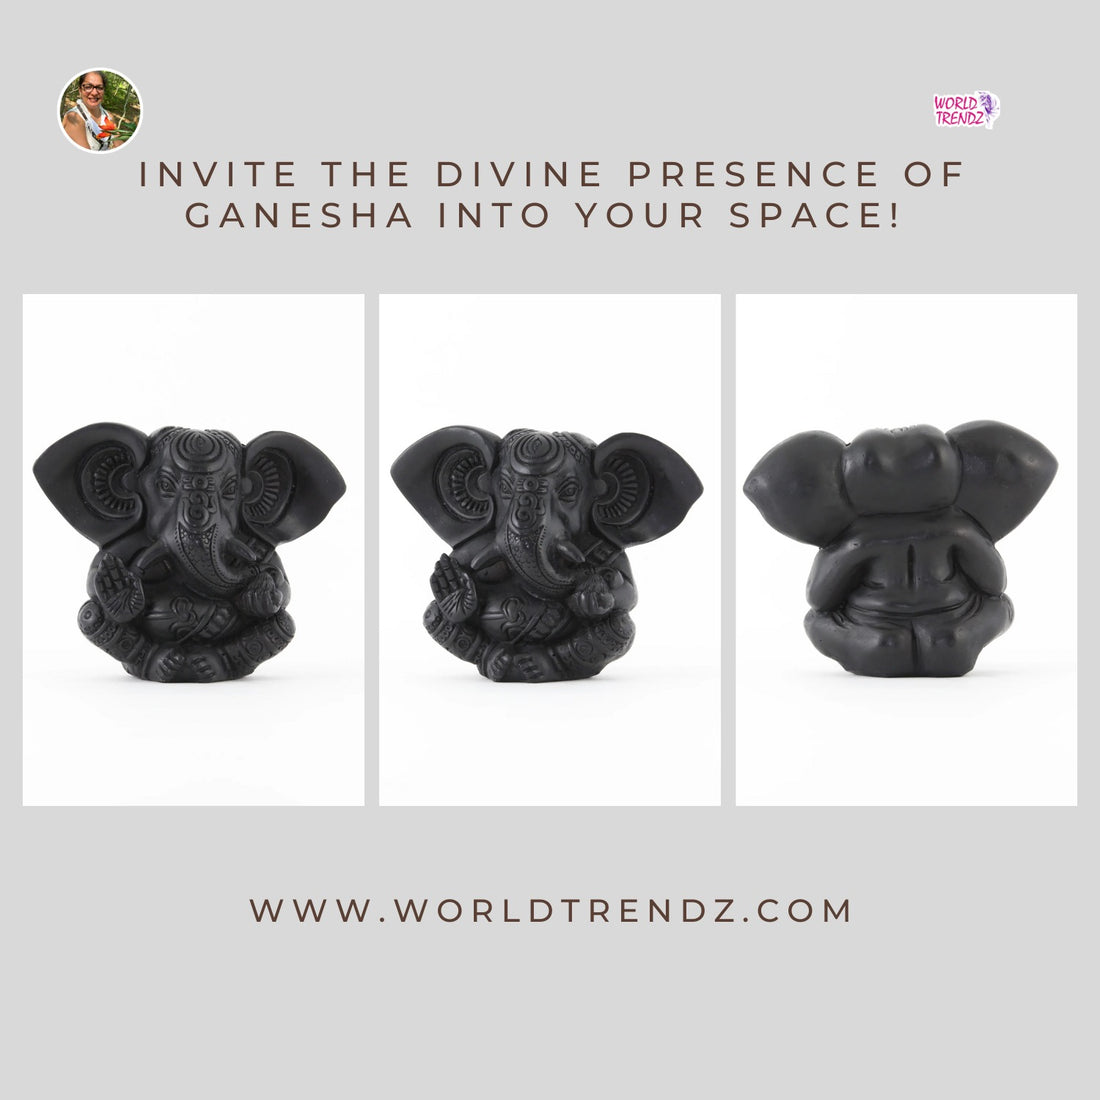 The Mystique of WorldTrendz's Ganesha Big Ear Statue: A Dark, Large-Sized Marvel